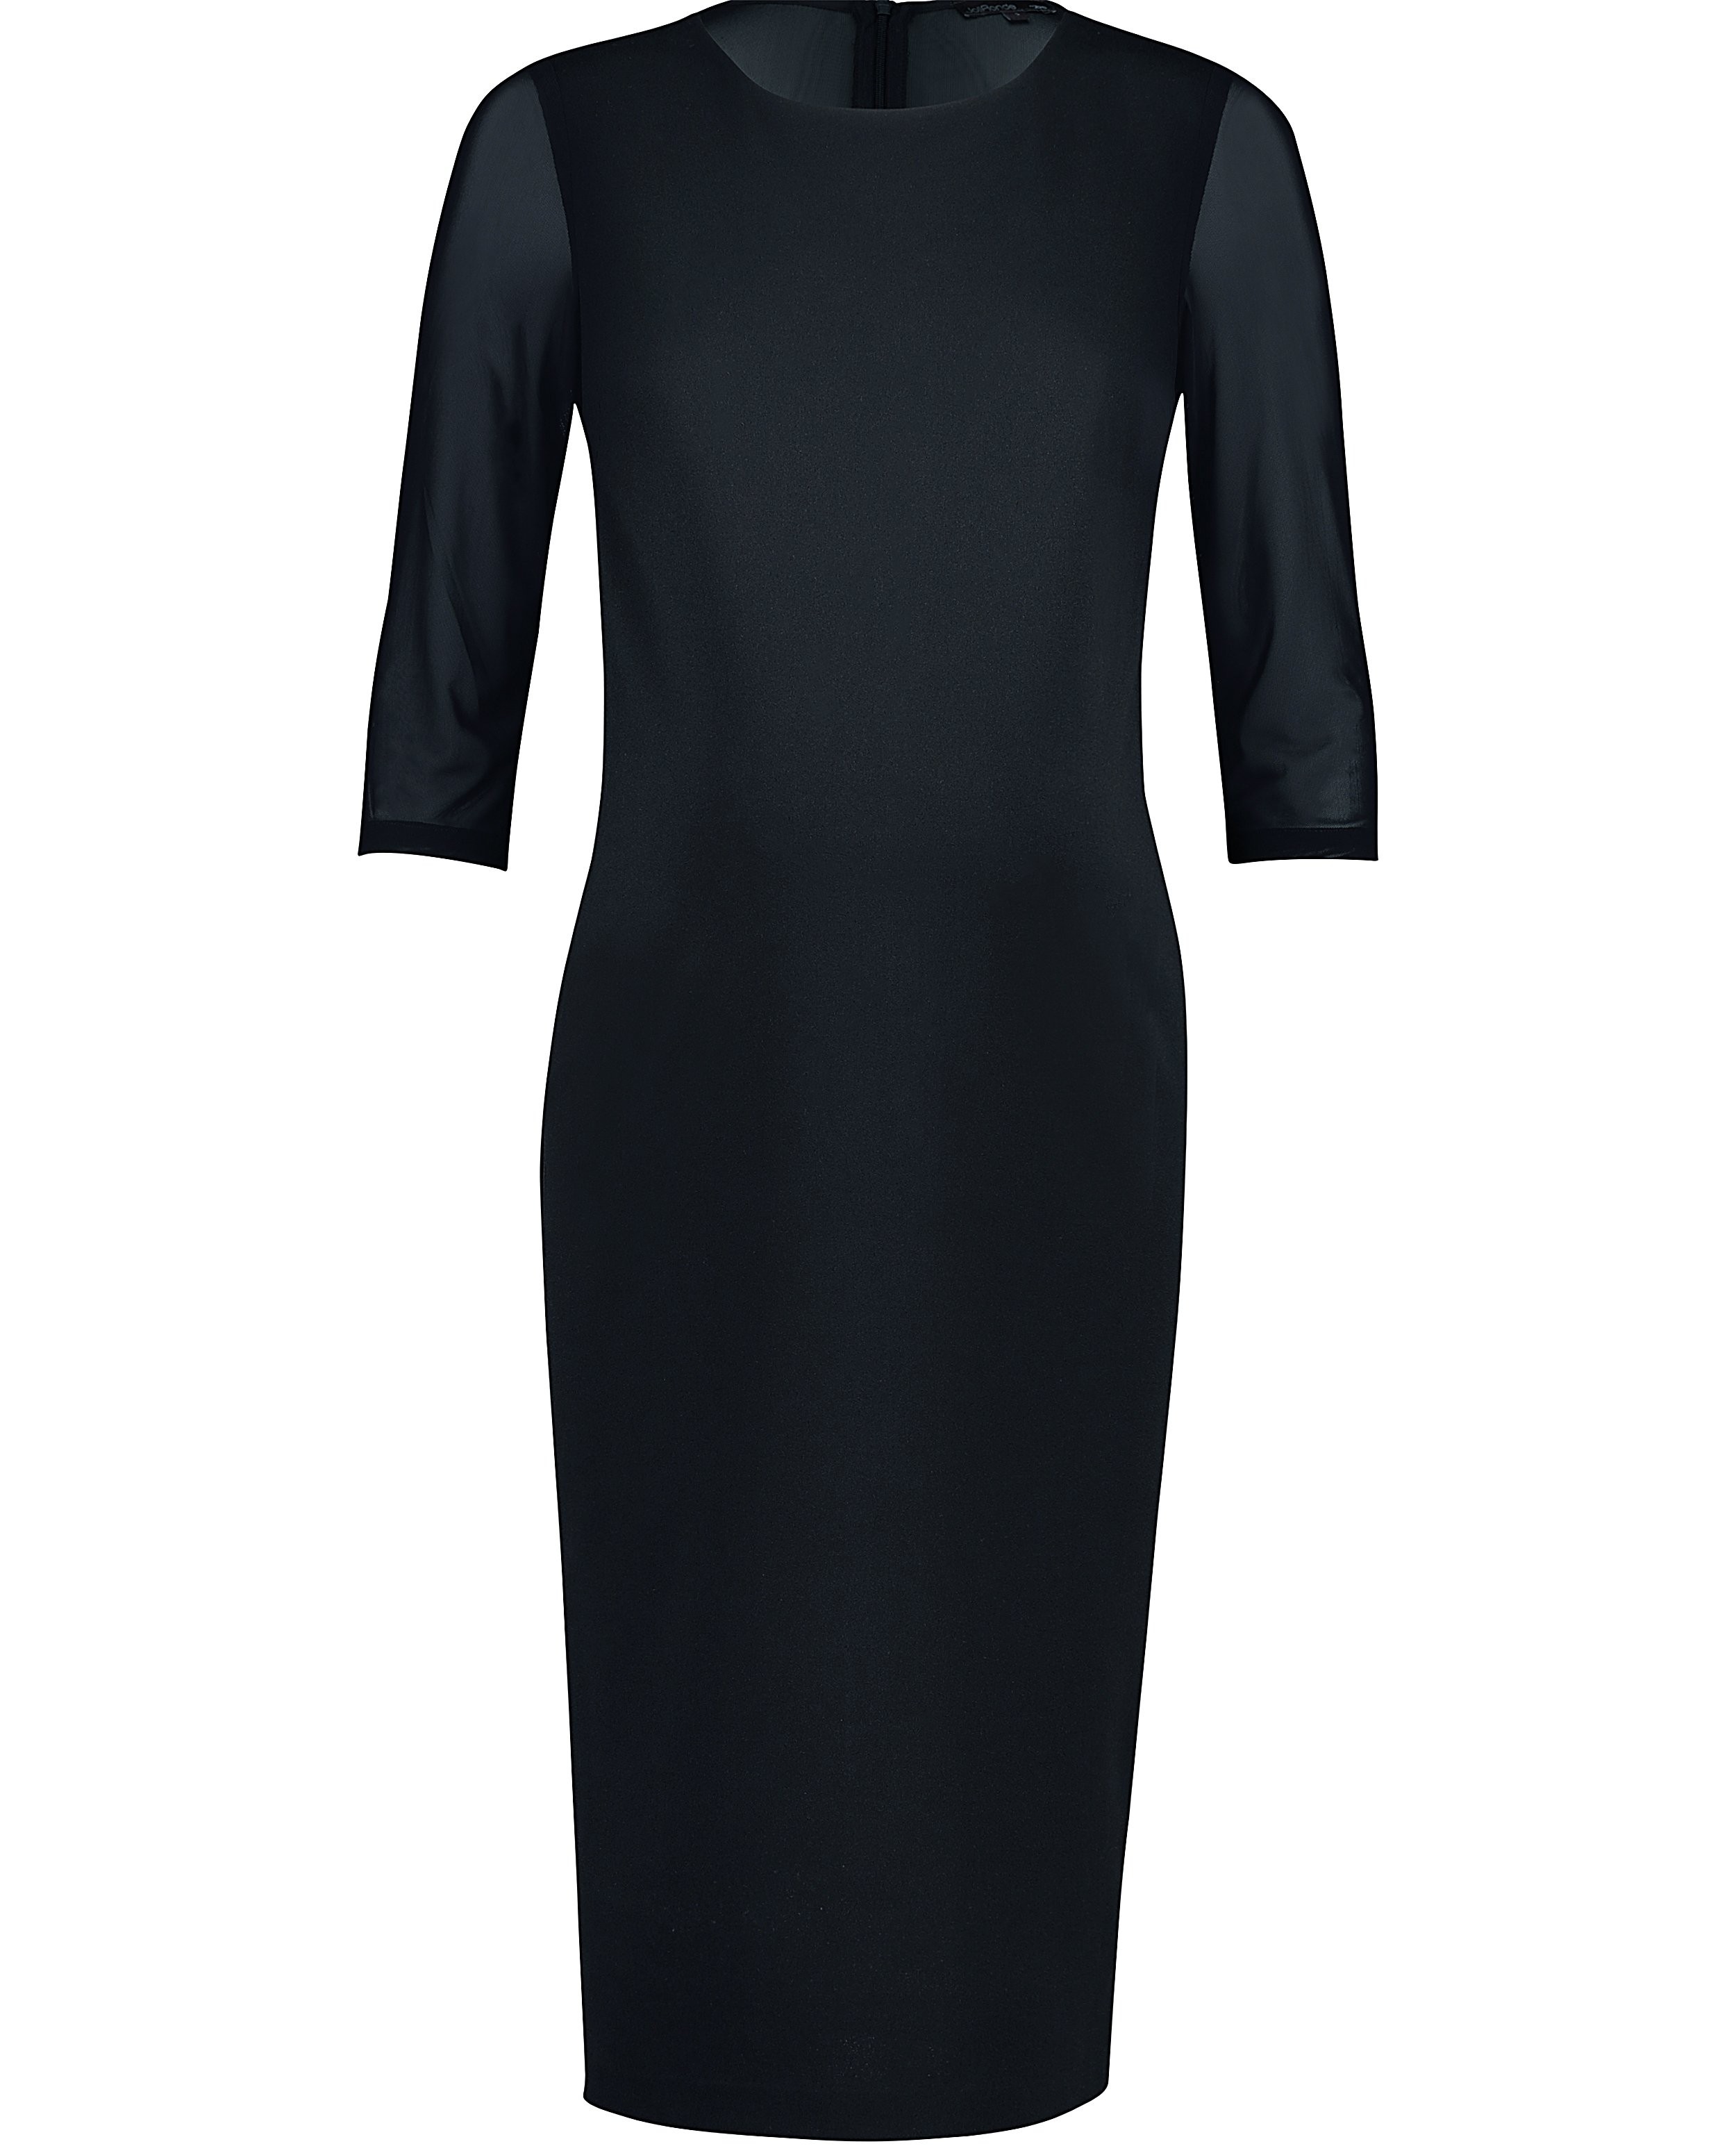 Zwarte stretchy jurk - met mesh details - Joli Ronde